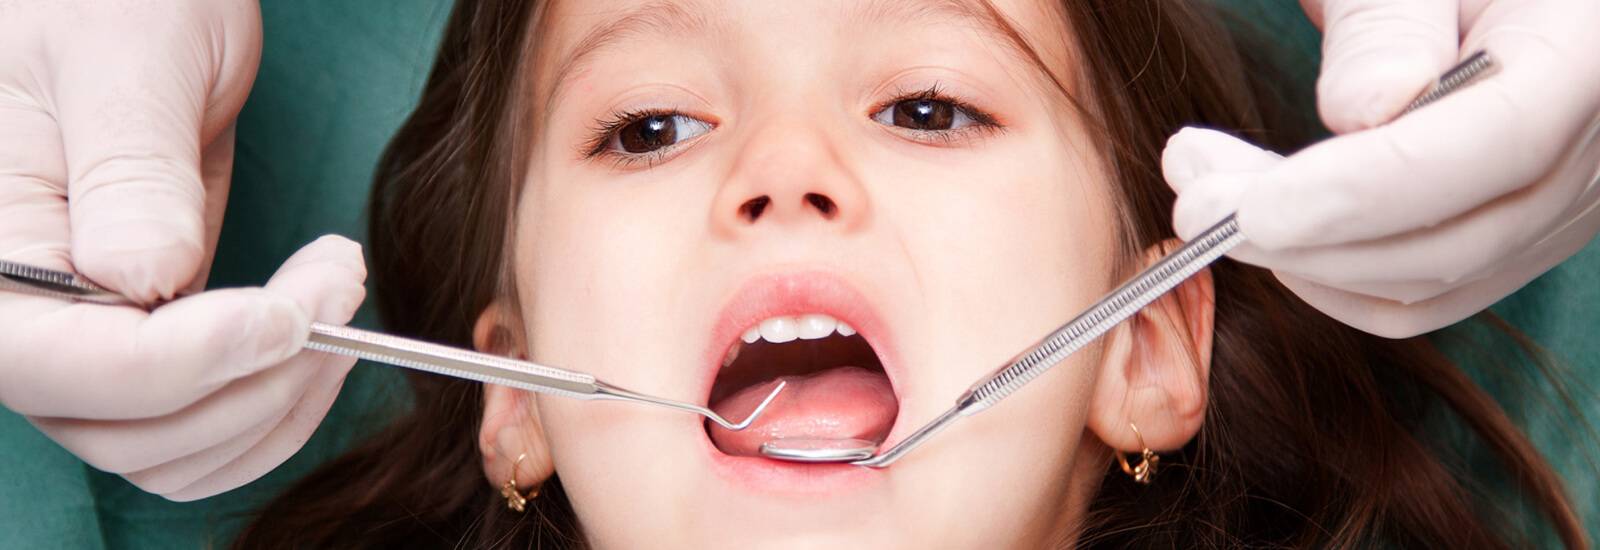 Pediatric-Dentistry